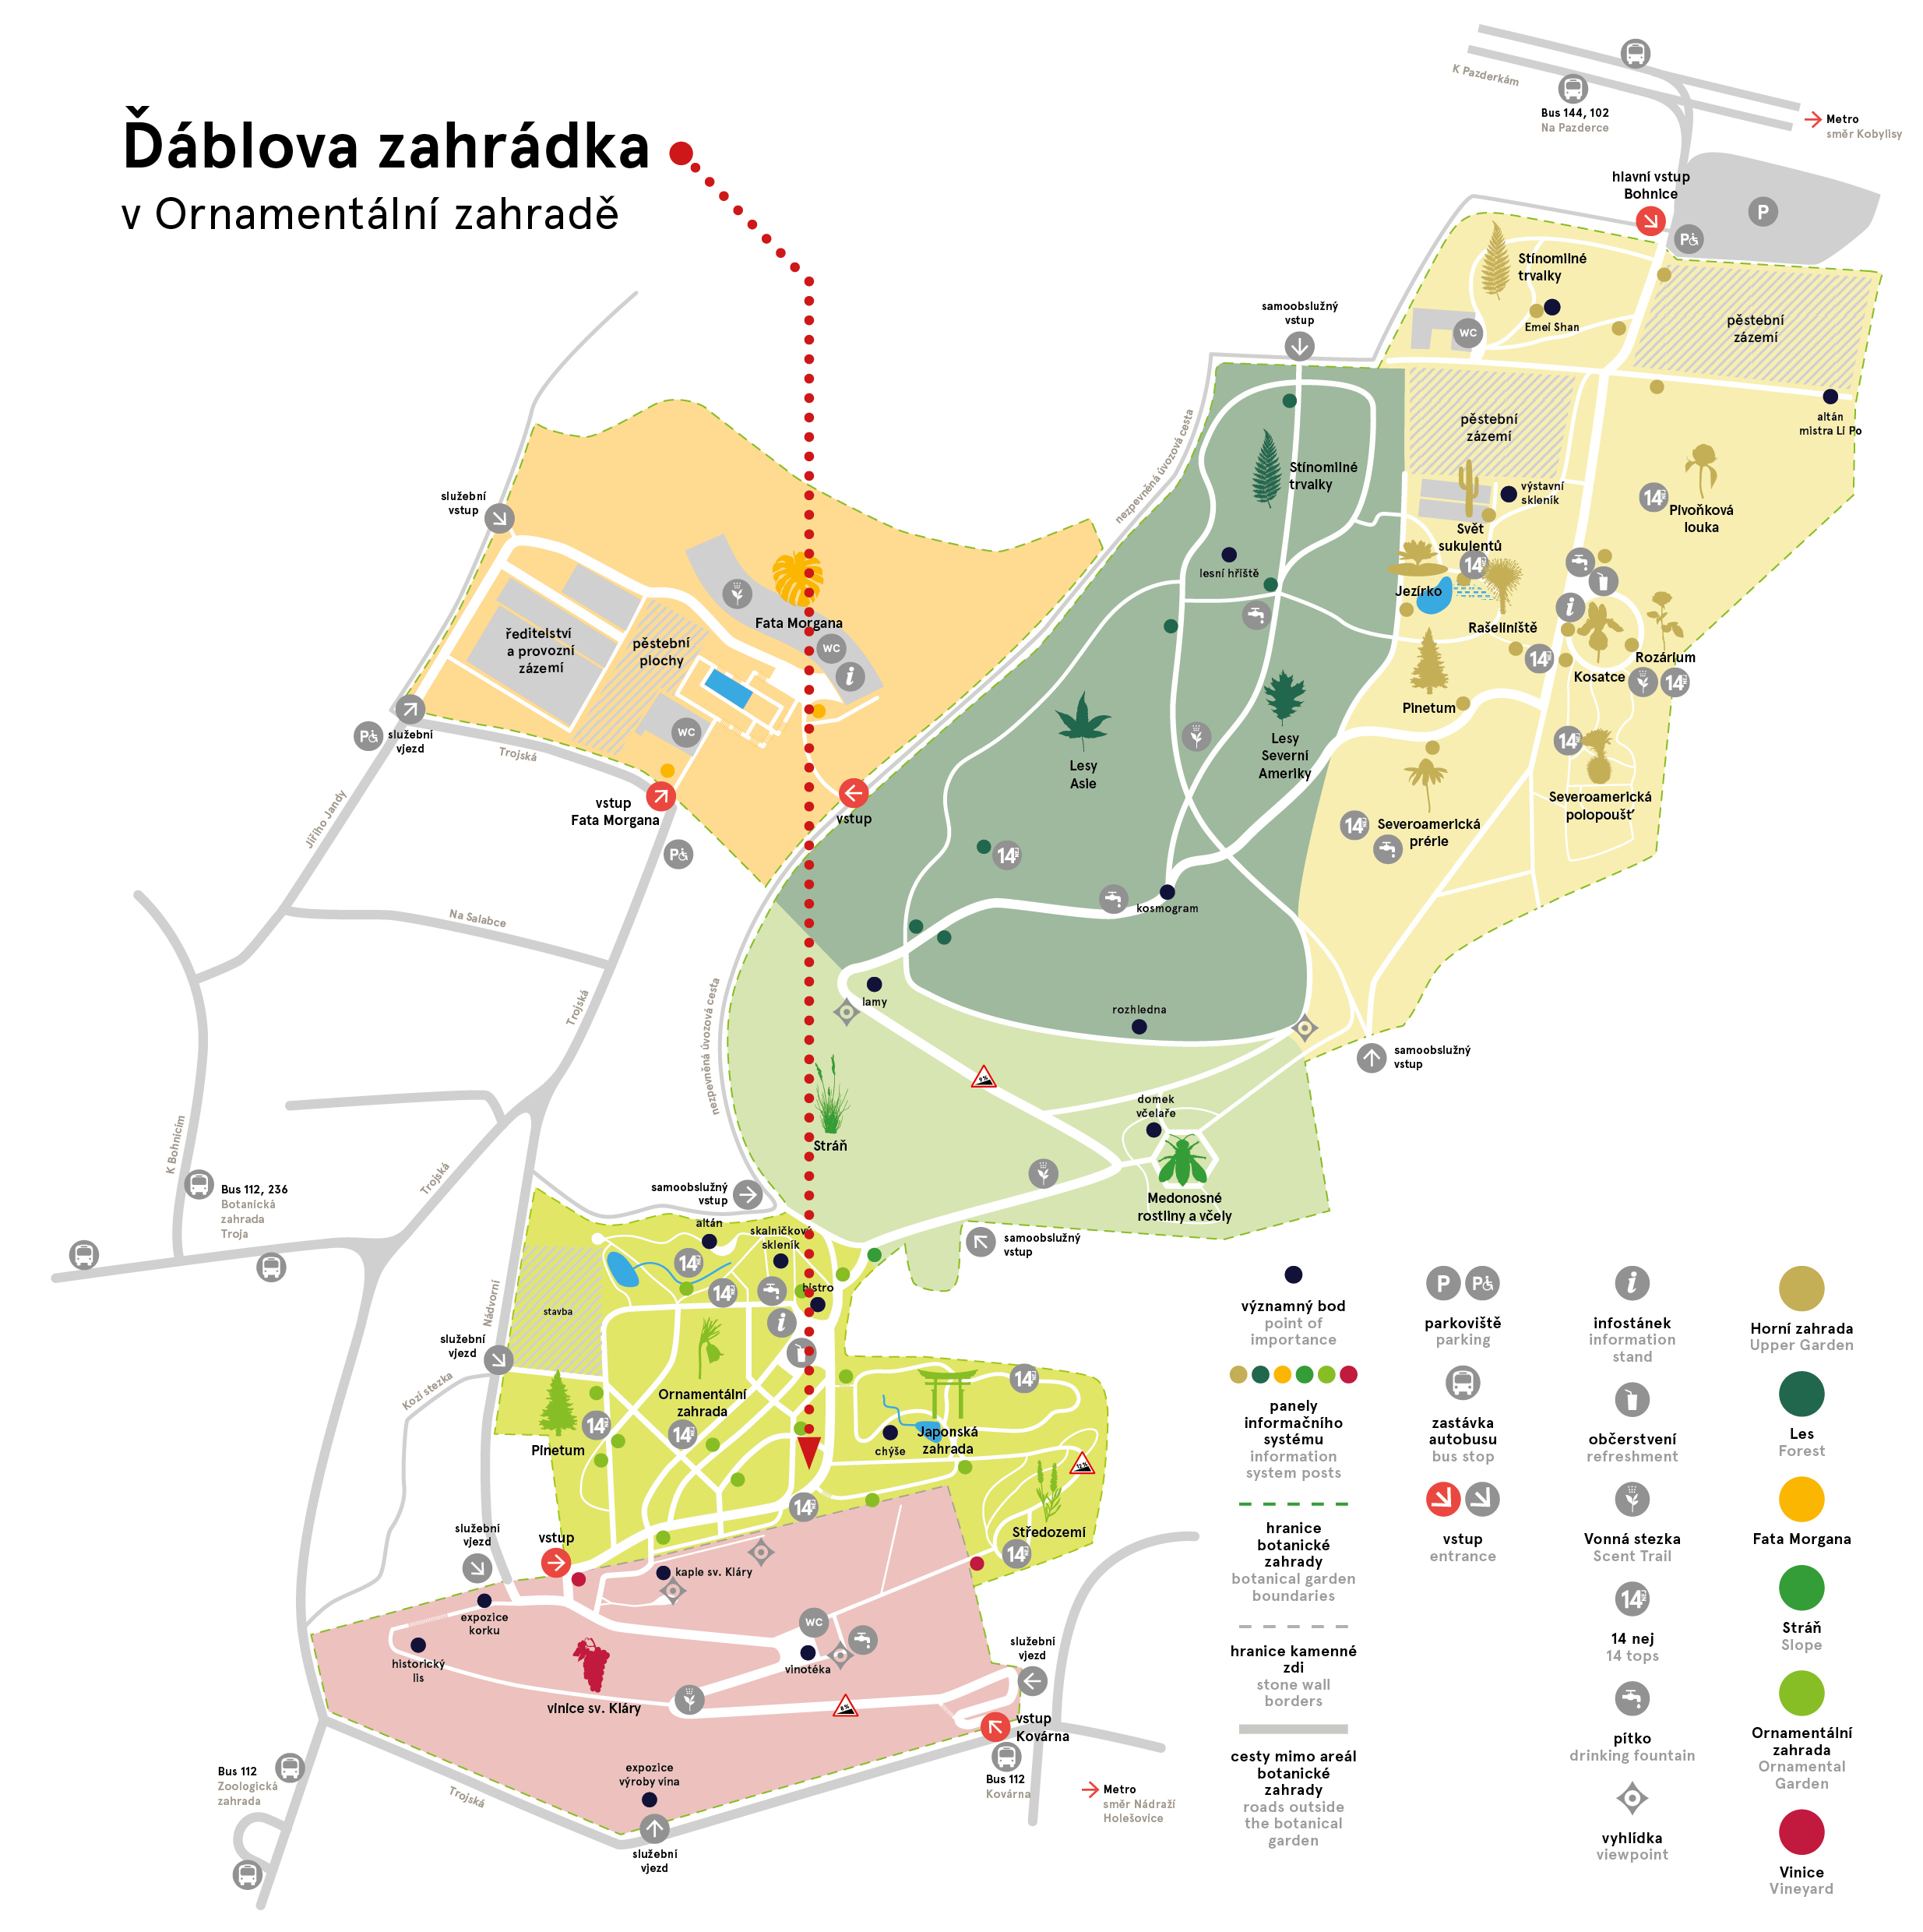 mapa_dablova_zahradka_